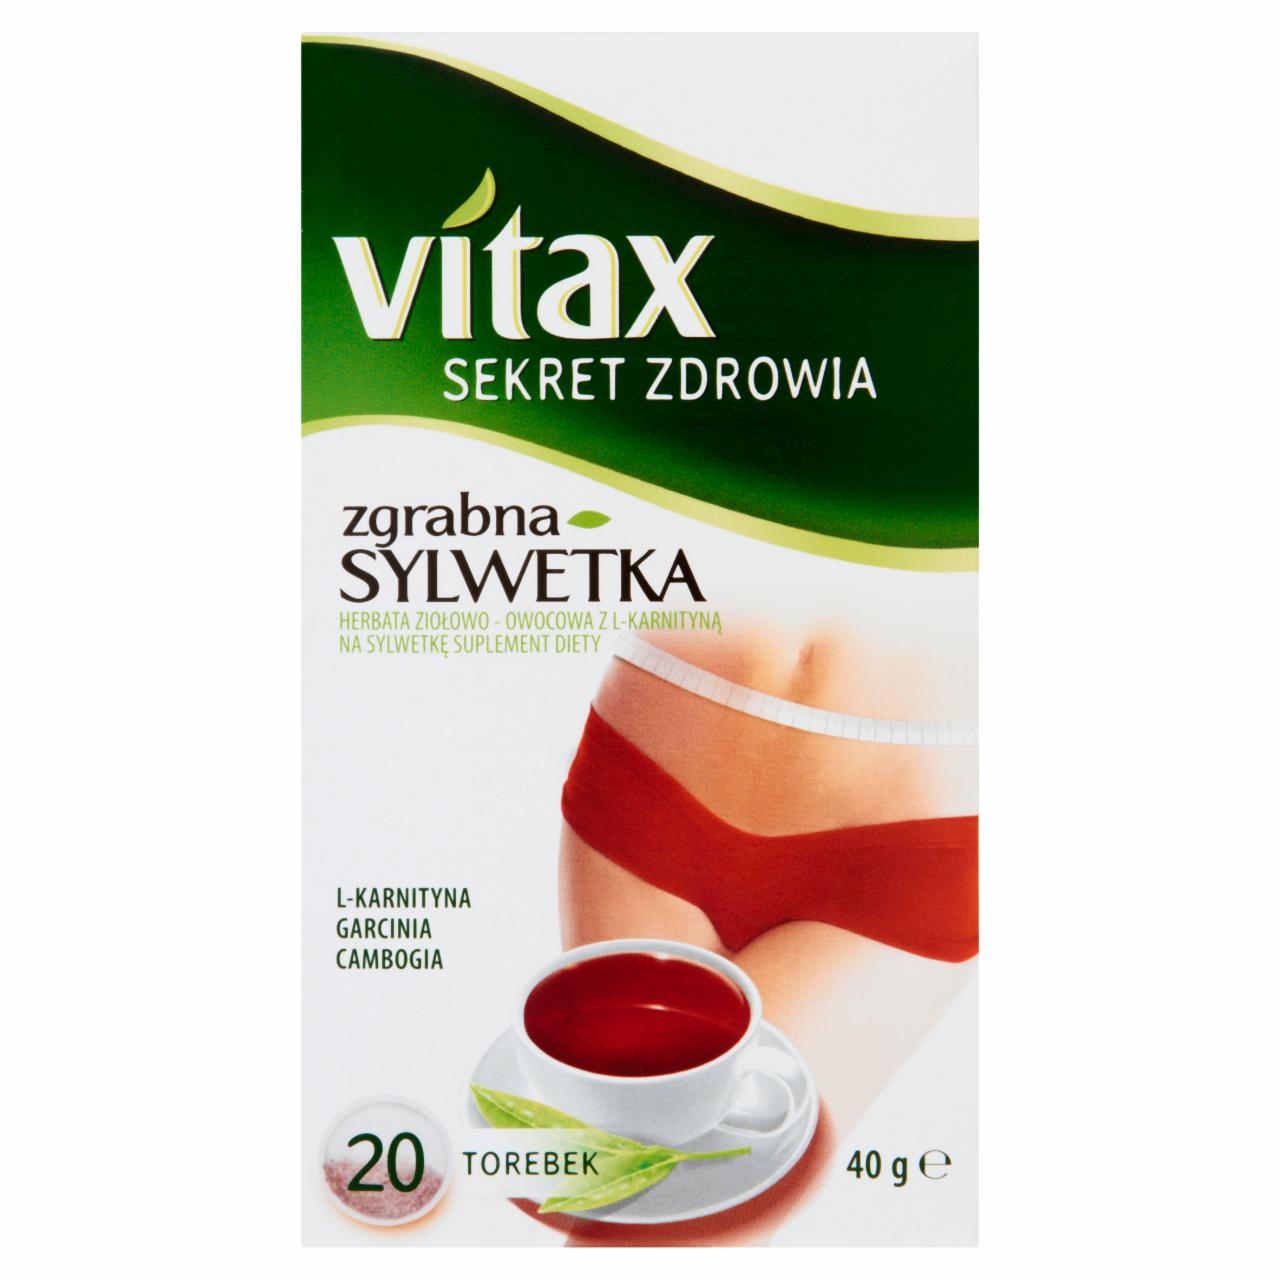 Zdjęcia - Vitax Sekret Zdrowia Zgrabna Sylwetka Herbata suplement diety 40 g (20 torebek)